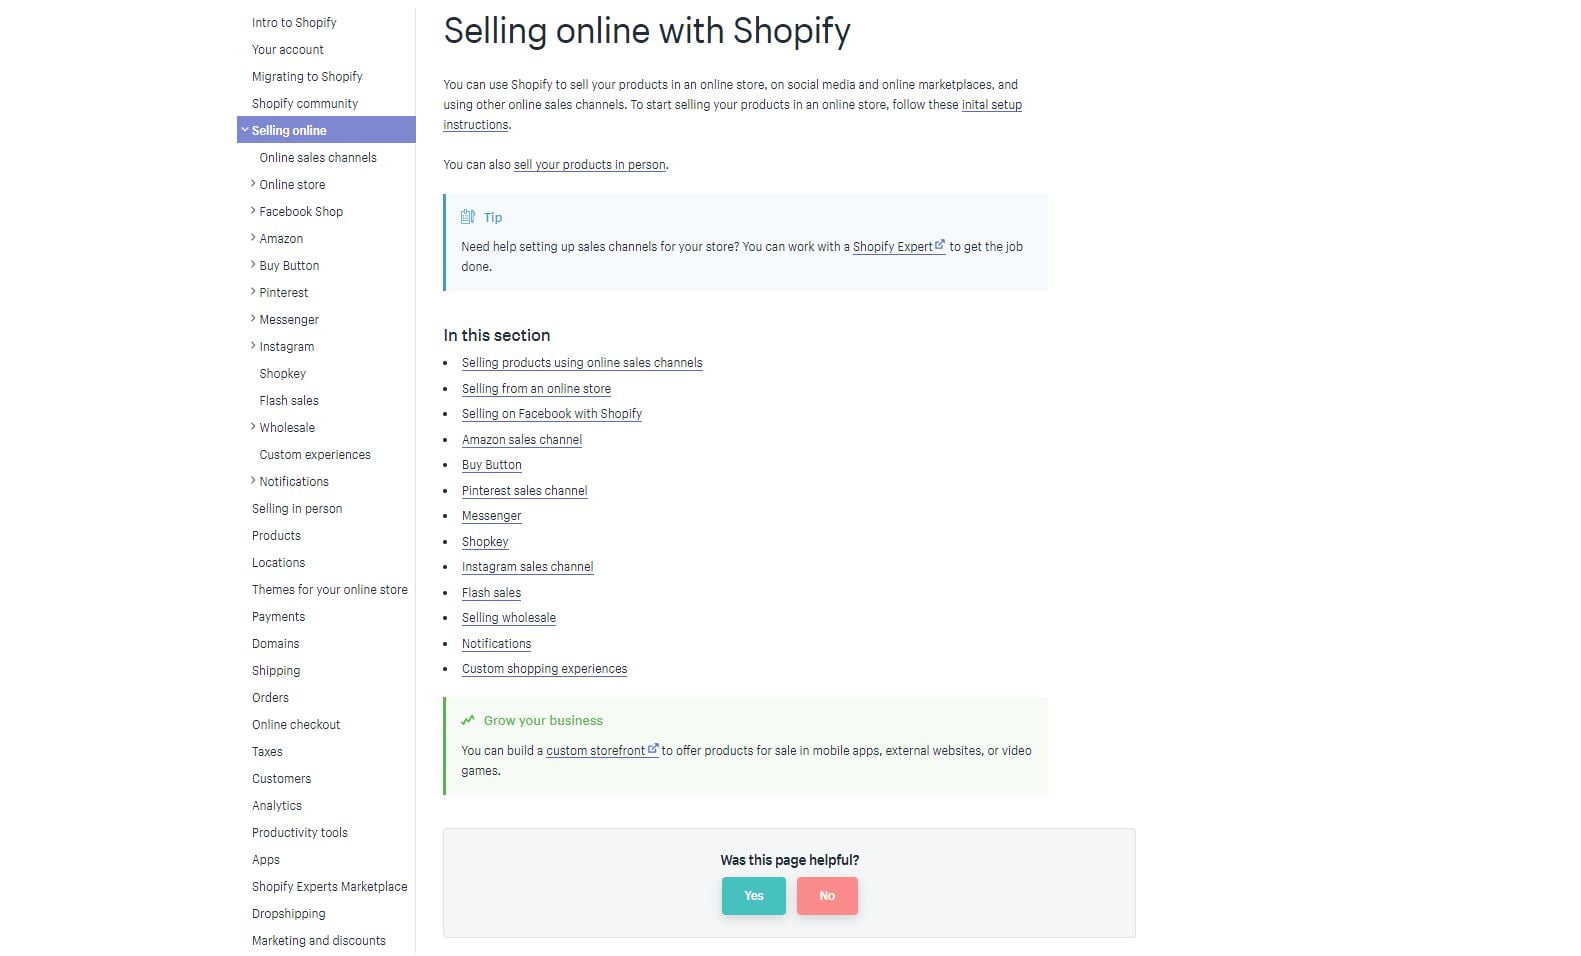 Shopifys help center